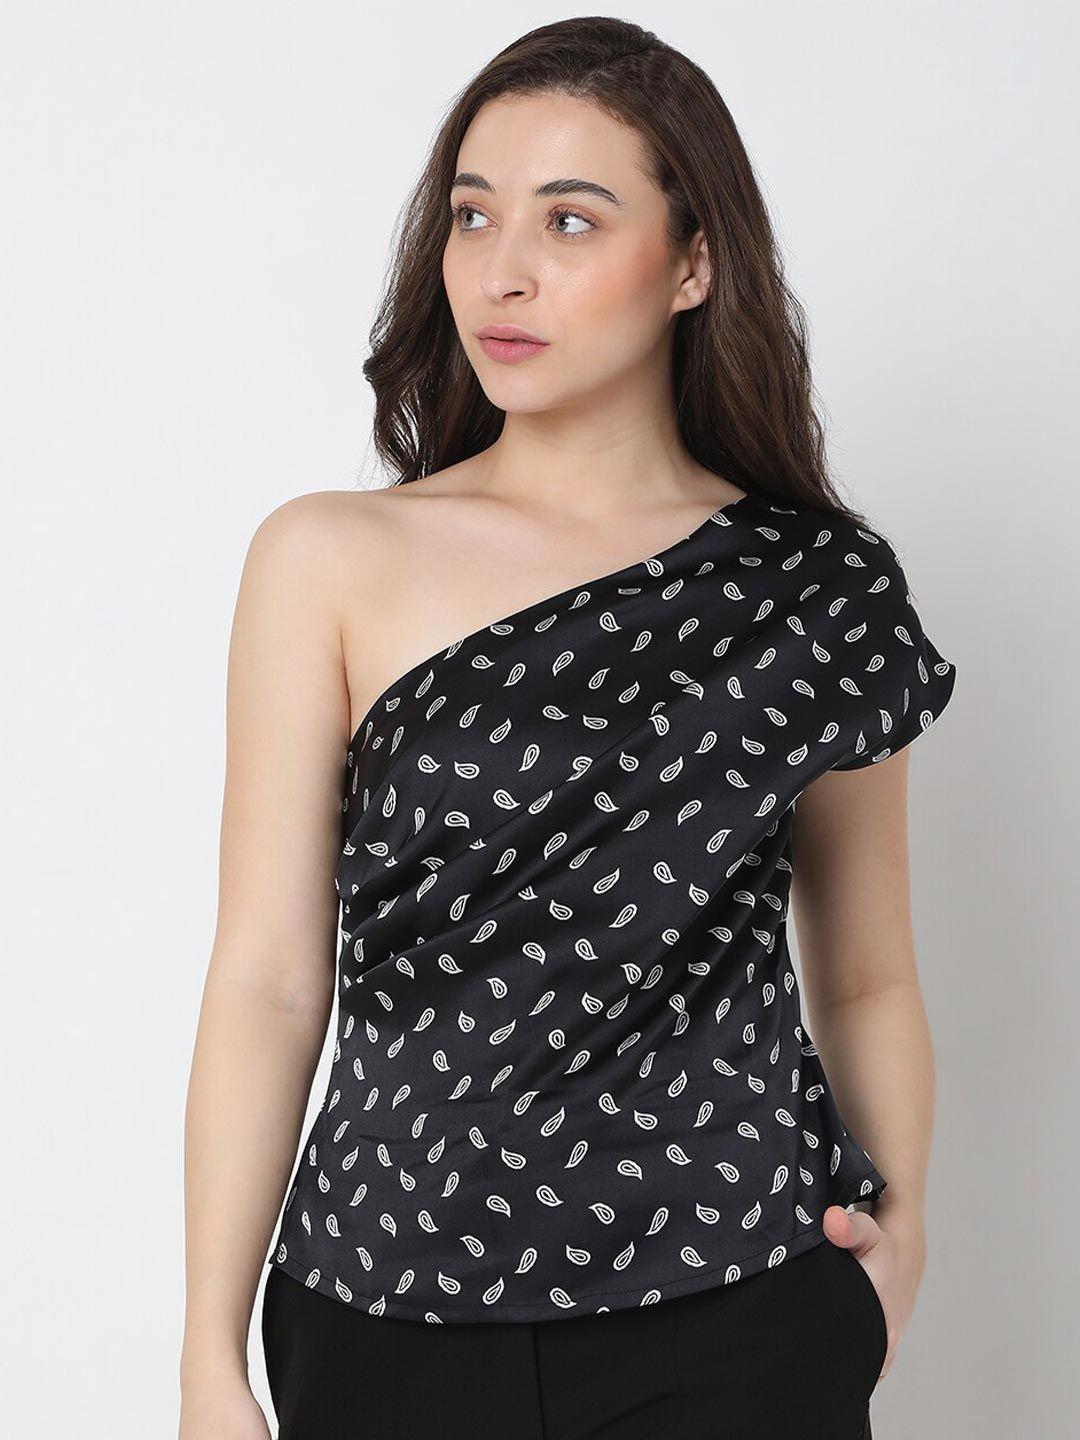 vero moda black & white geometric printed one shoulder top